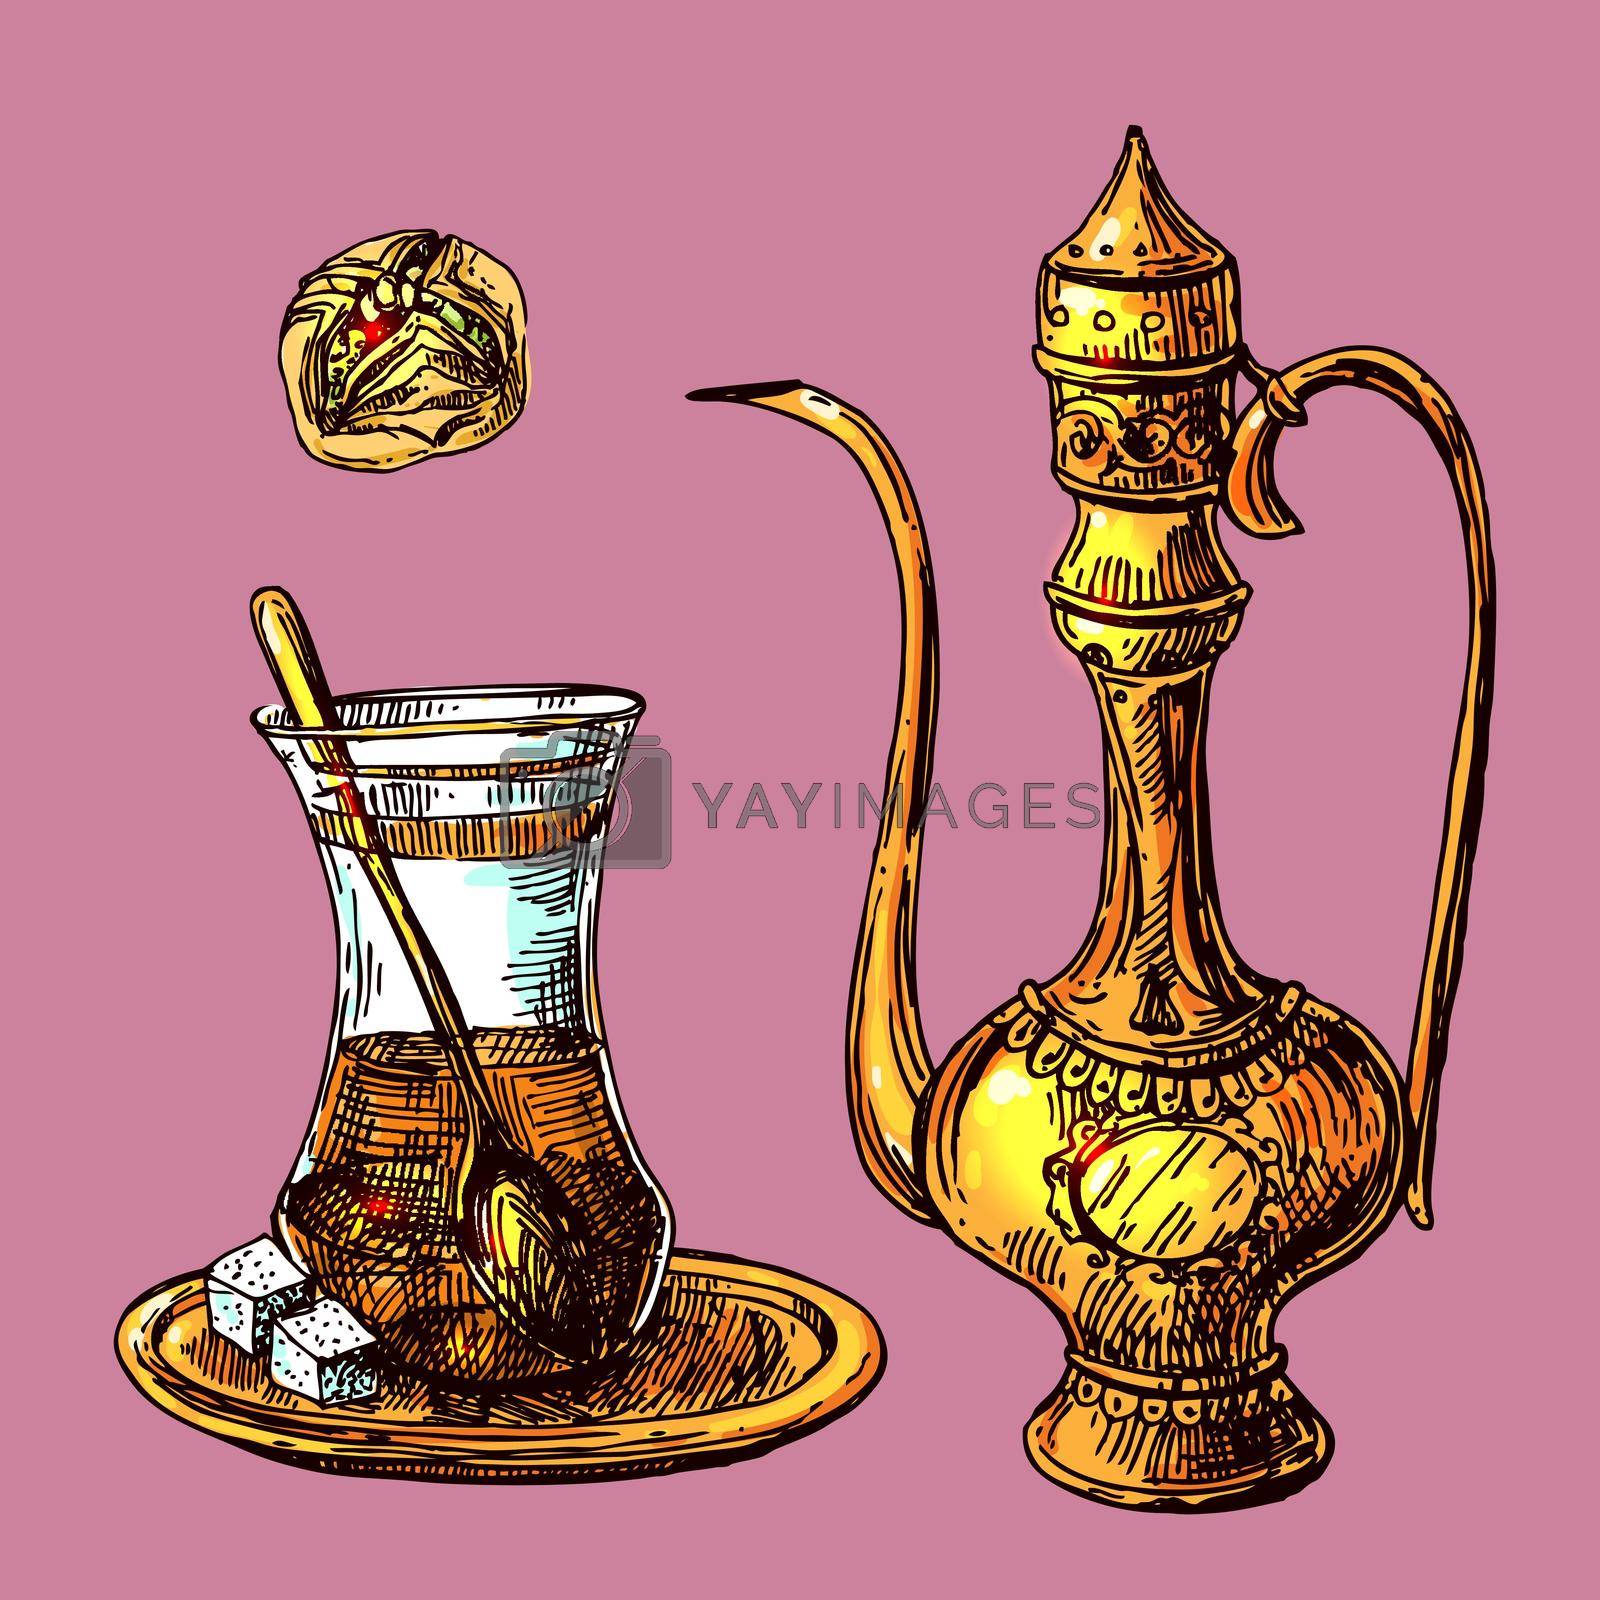 Royalty free image of East tea illustration by steshnikova